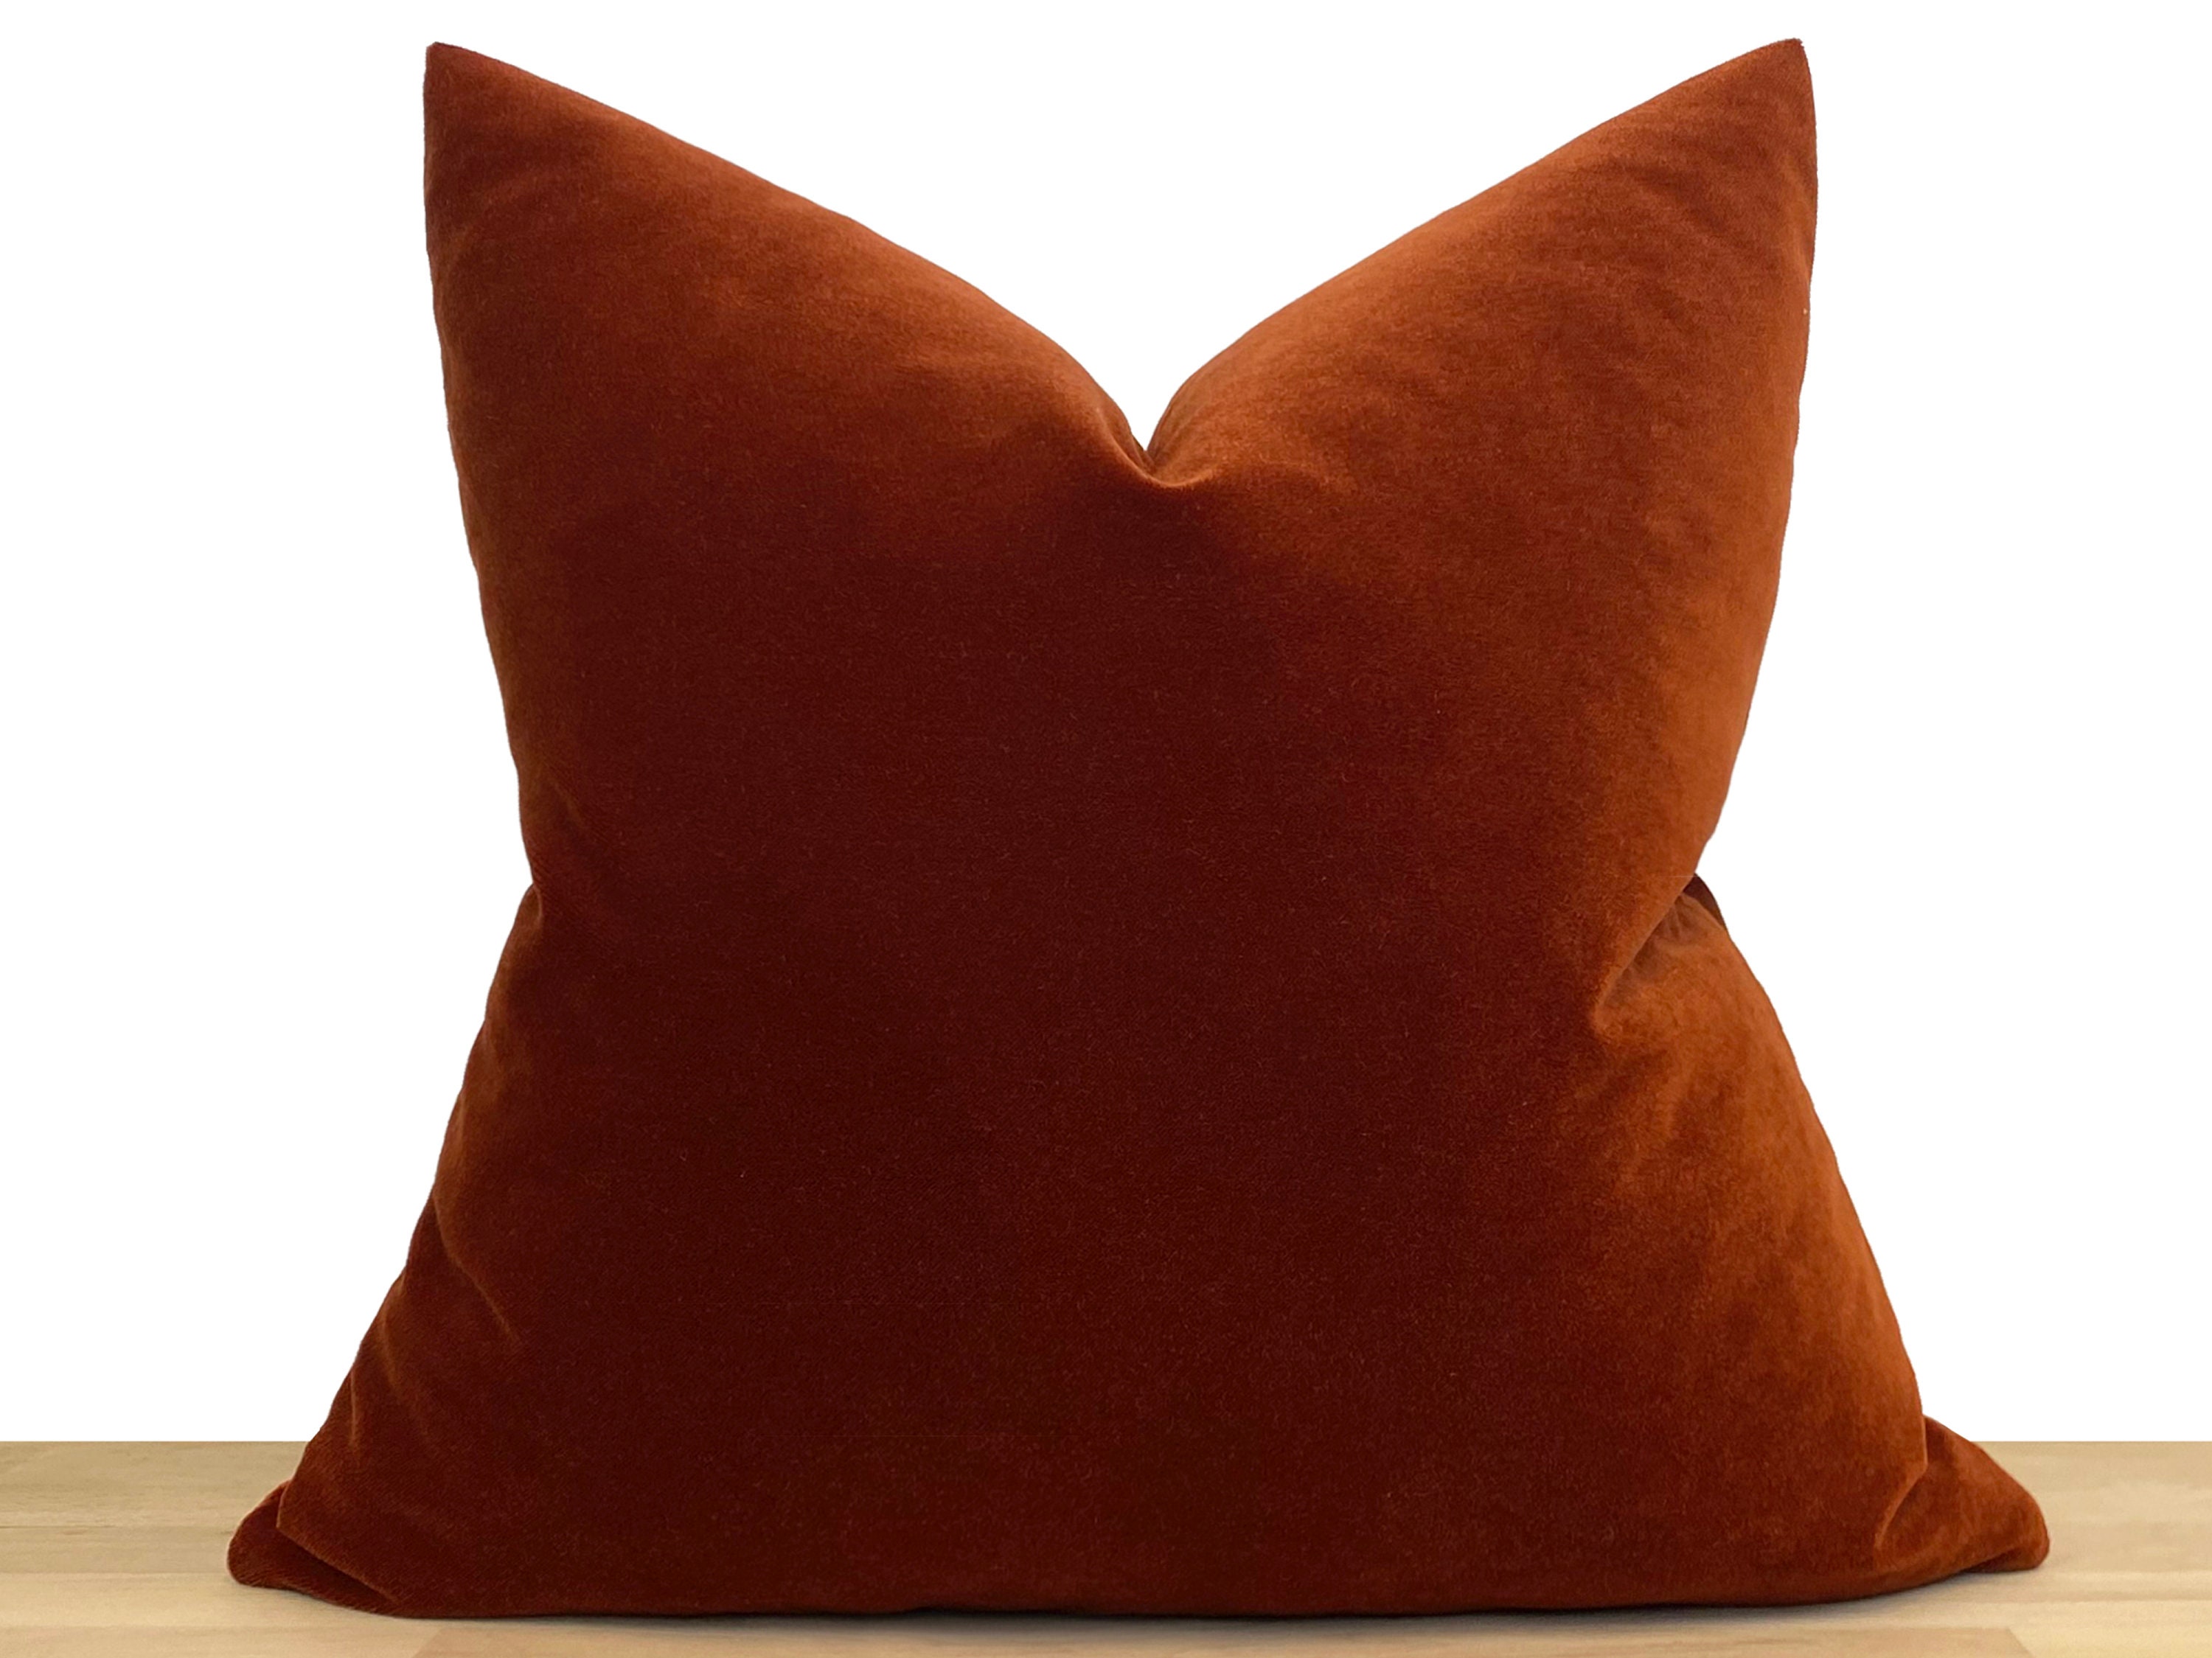 Topfinel Burnt Orange Scalloped Throw Pillow Covers 18x18,Terracotta Waffle  Weave Textured Crochet Cotton Cozy Retro Funky Pillows Set of 2, Rust Fall